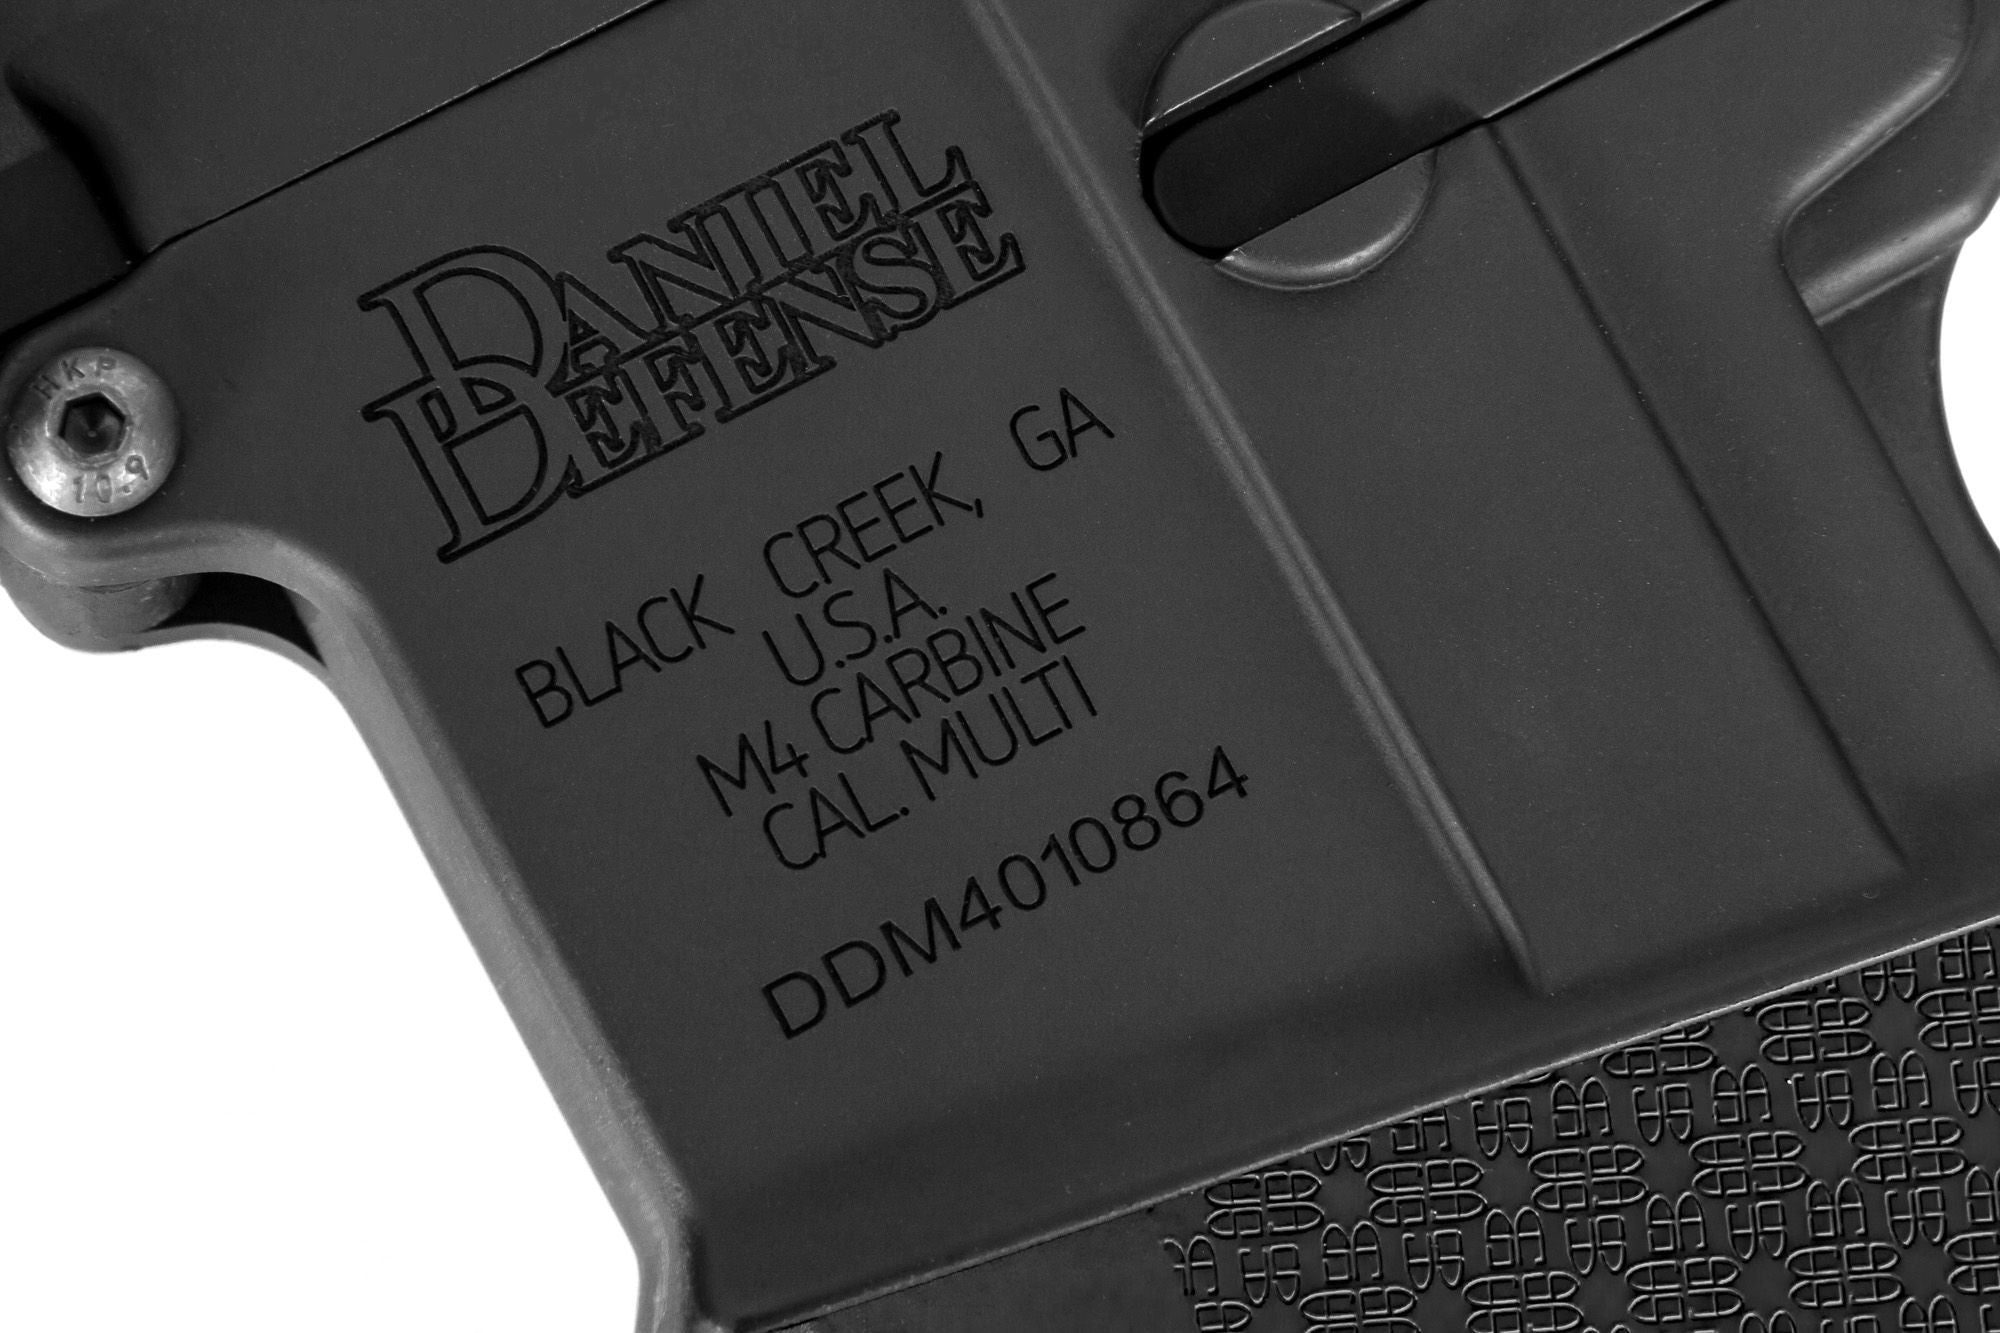 Specna Arms - Daniel Defense® MK18 SA-E19 EDGE™ Carbine Replica - Black